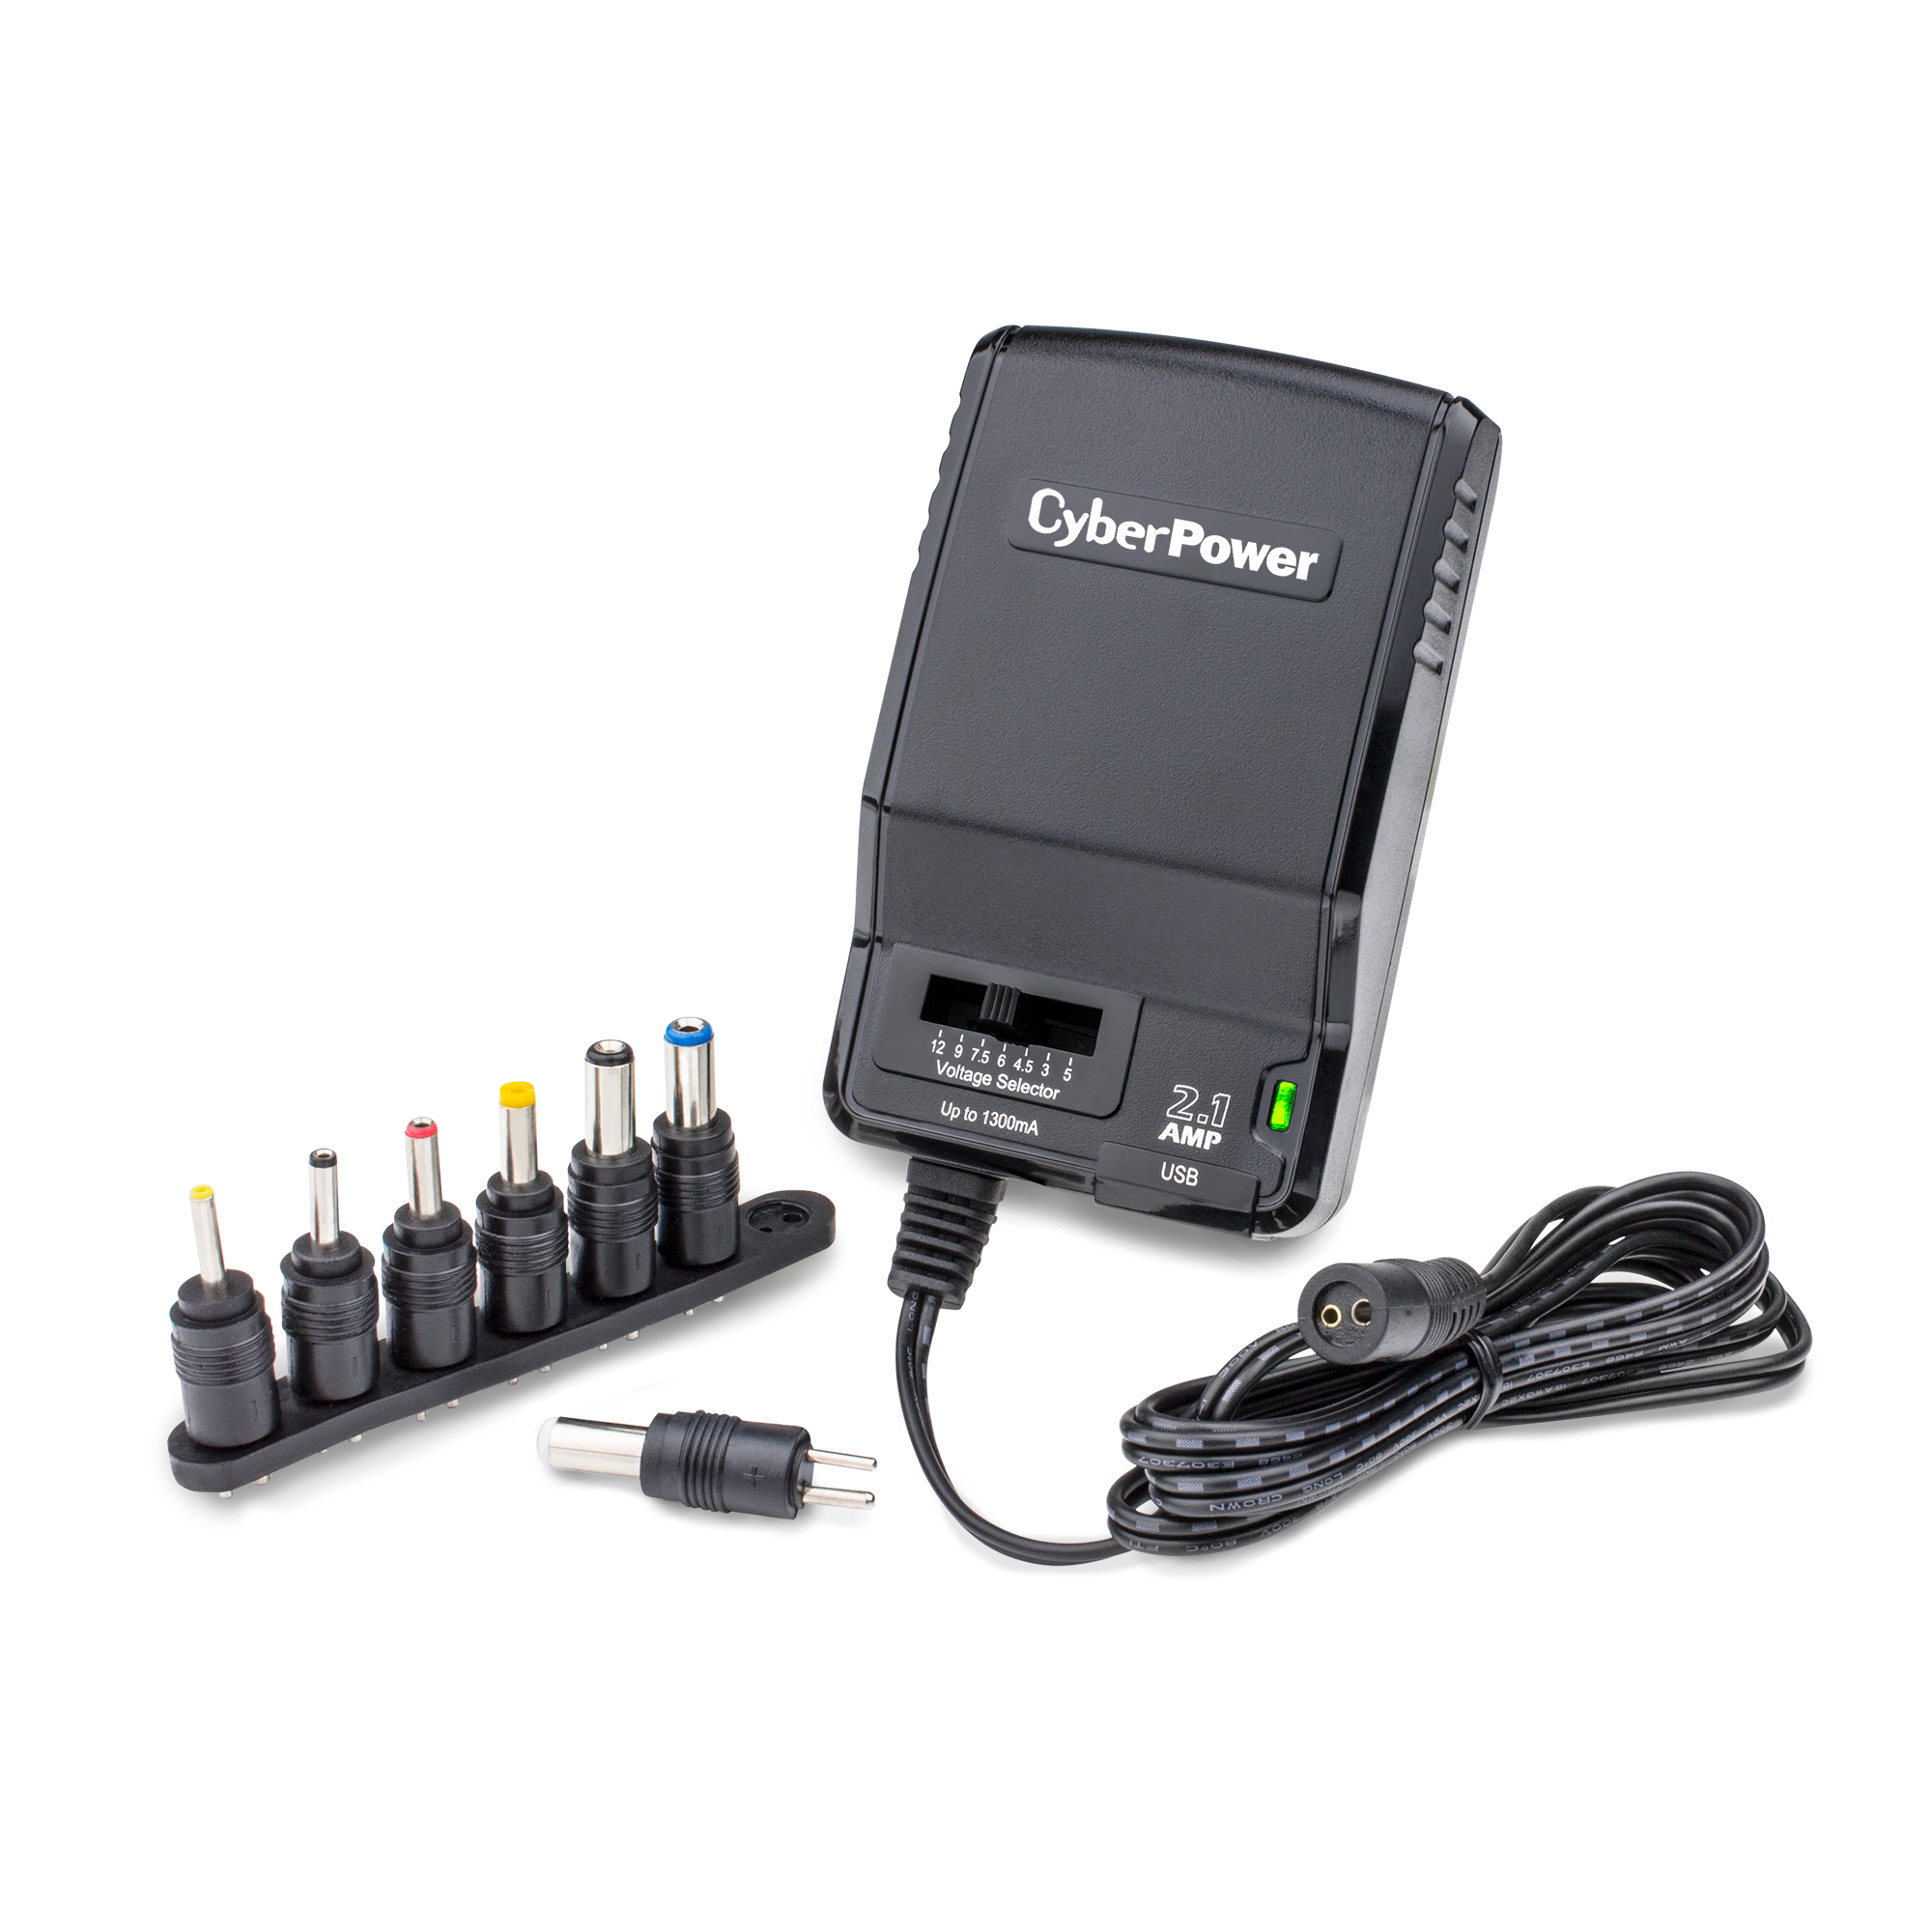 CPUAC1U1300 - Universal Power Adapters - Product Details, Specs, Downloads